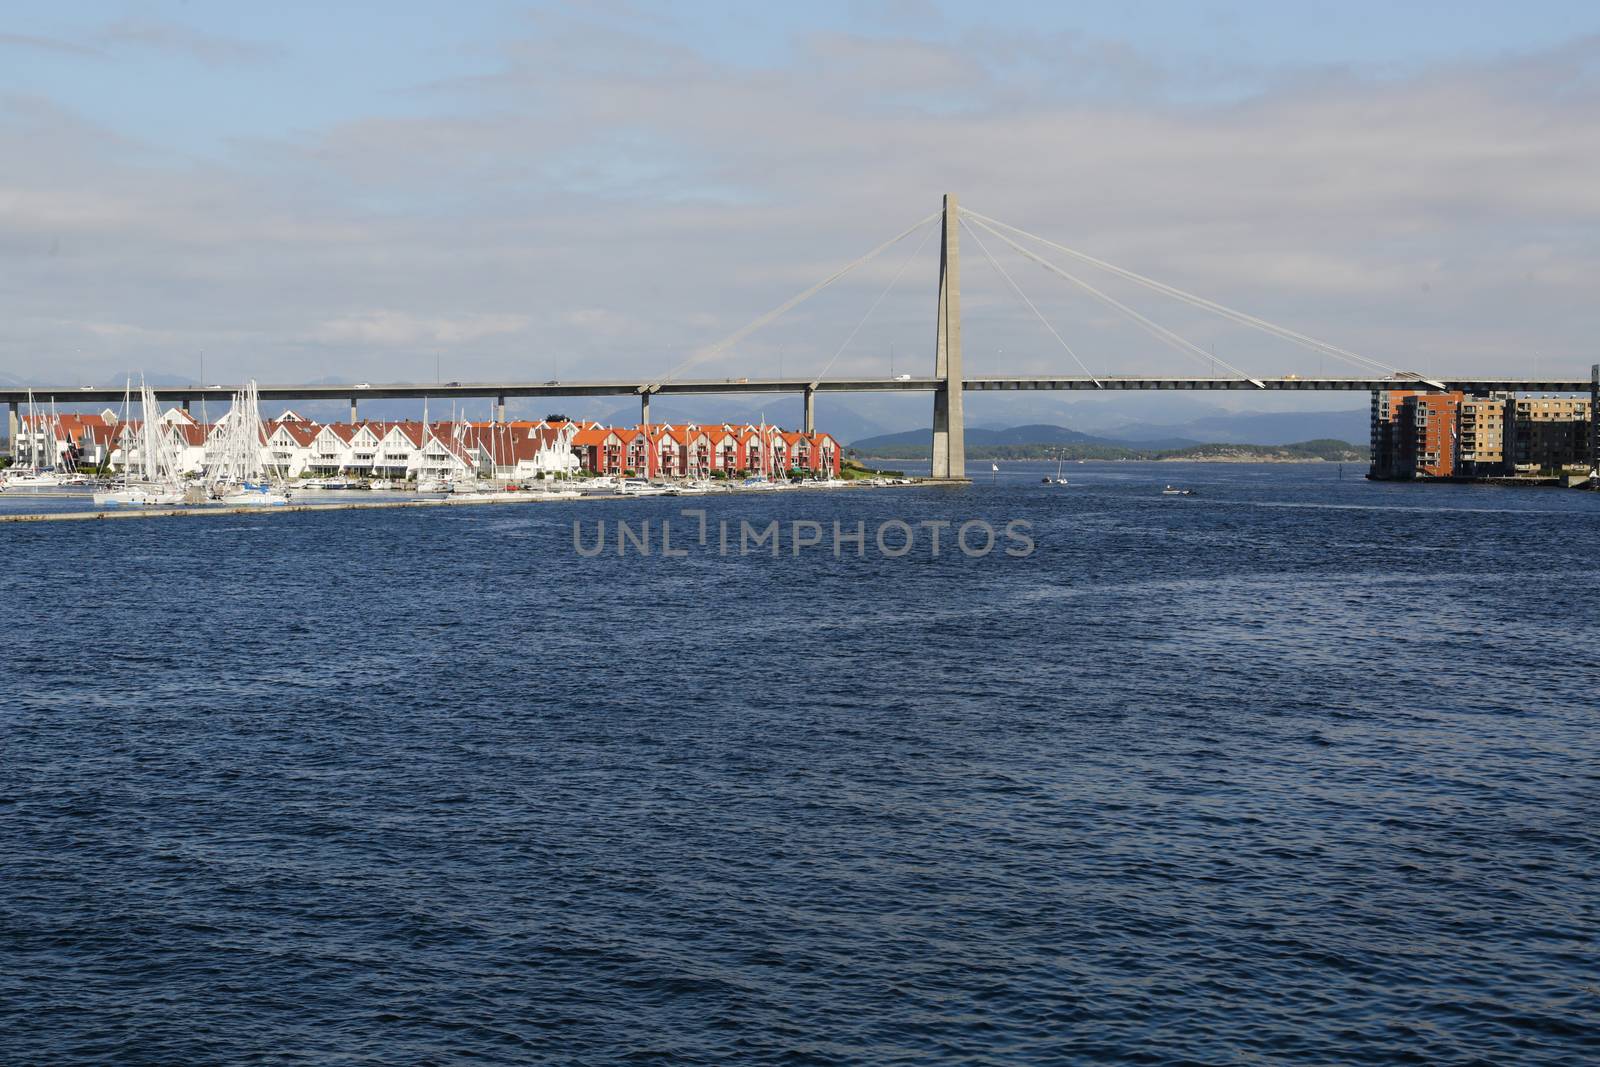 The bridge over the sea in the port of Stavanger, Norway